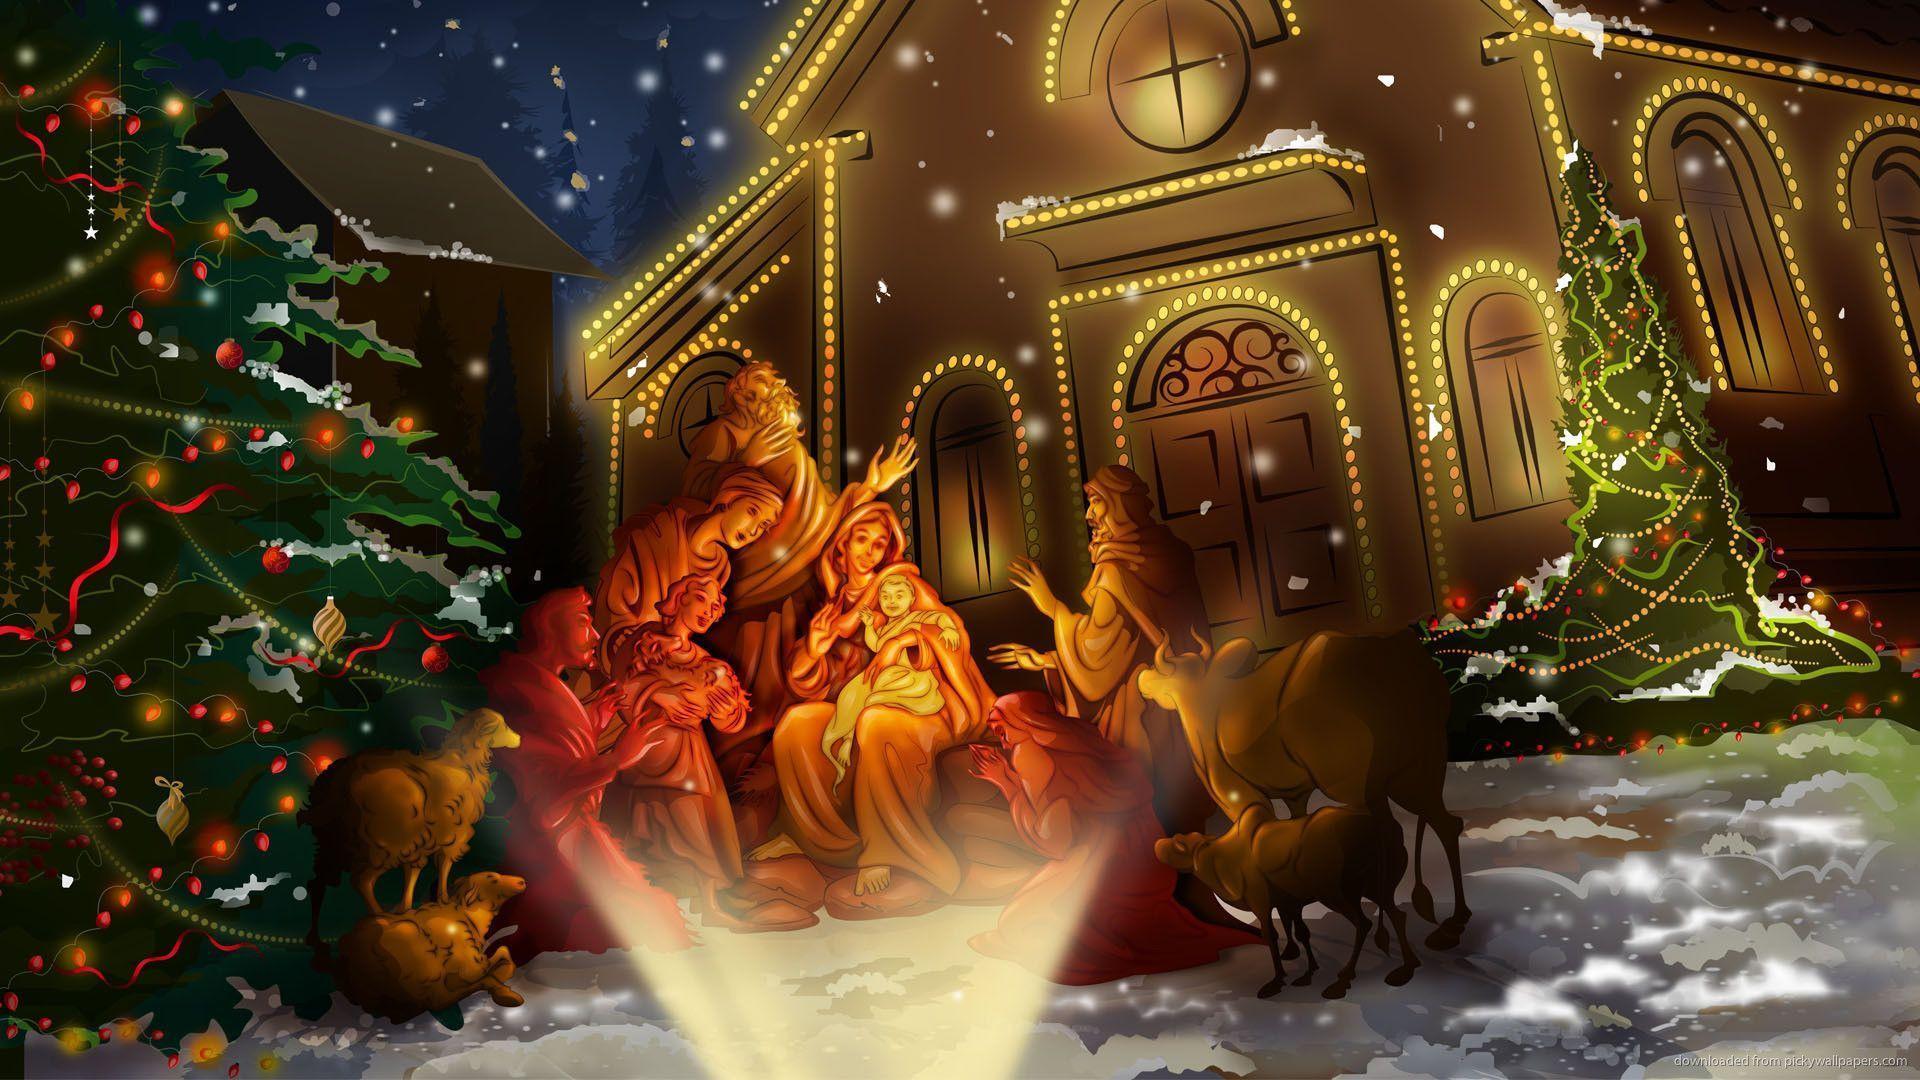 Download 1920x1080 Christmas Scene Wallpaper